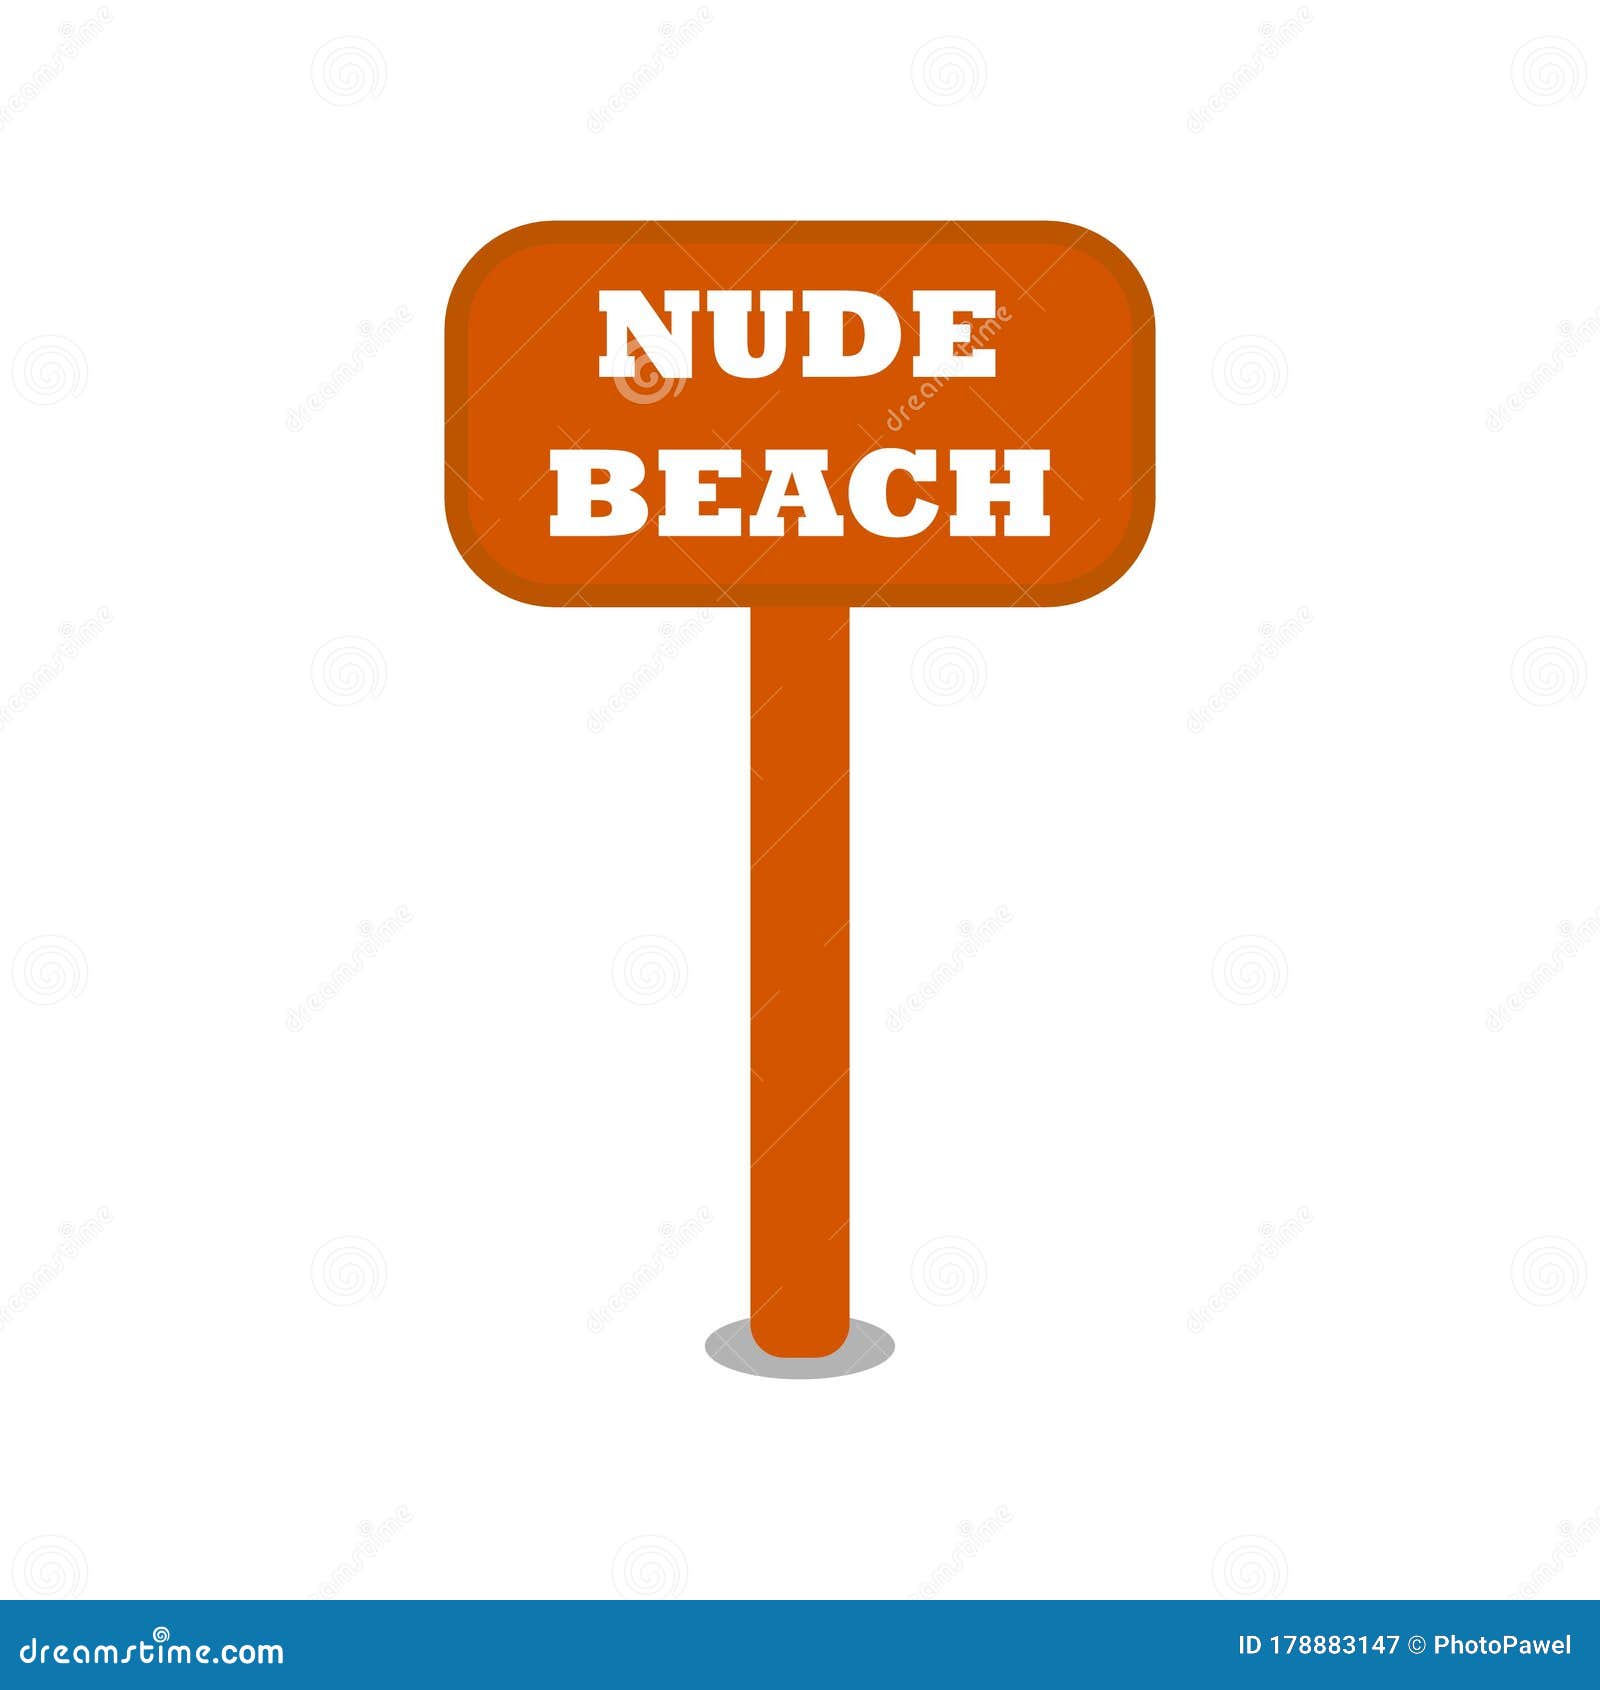 Nude Beach Teen Pageant